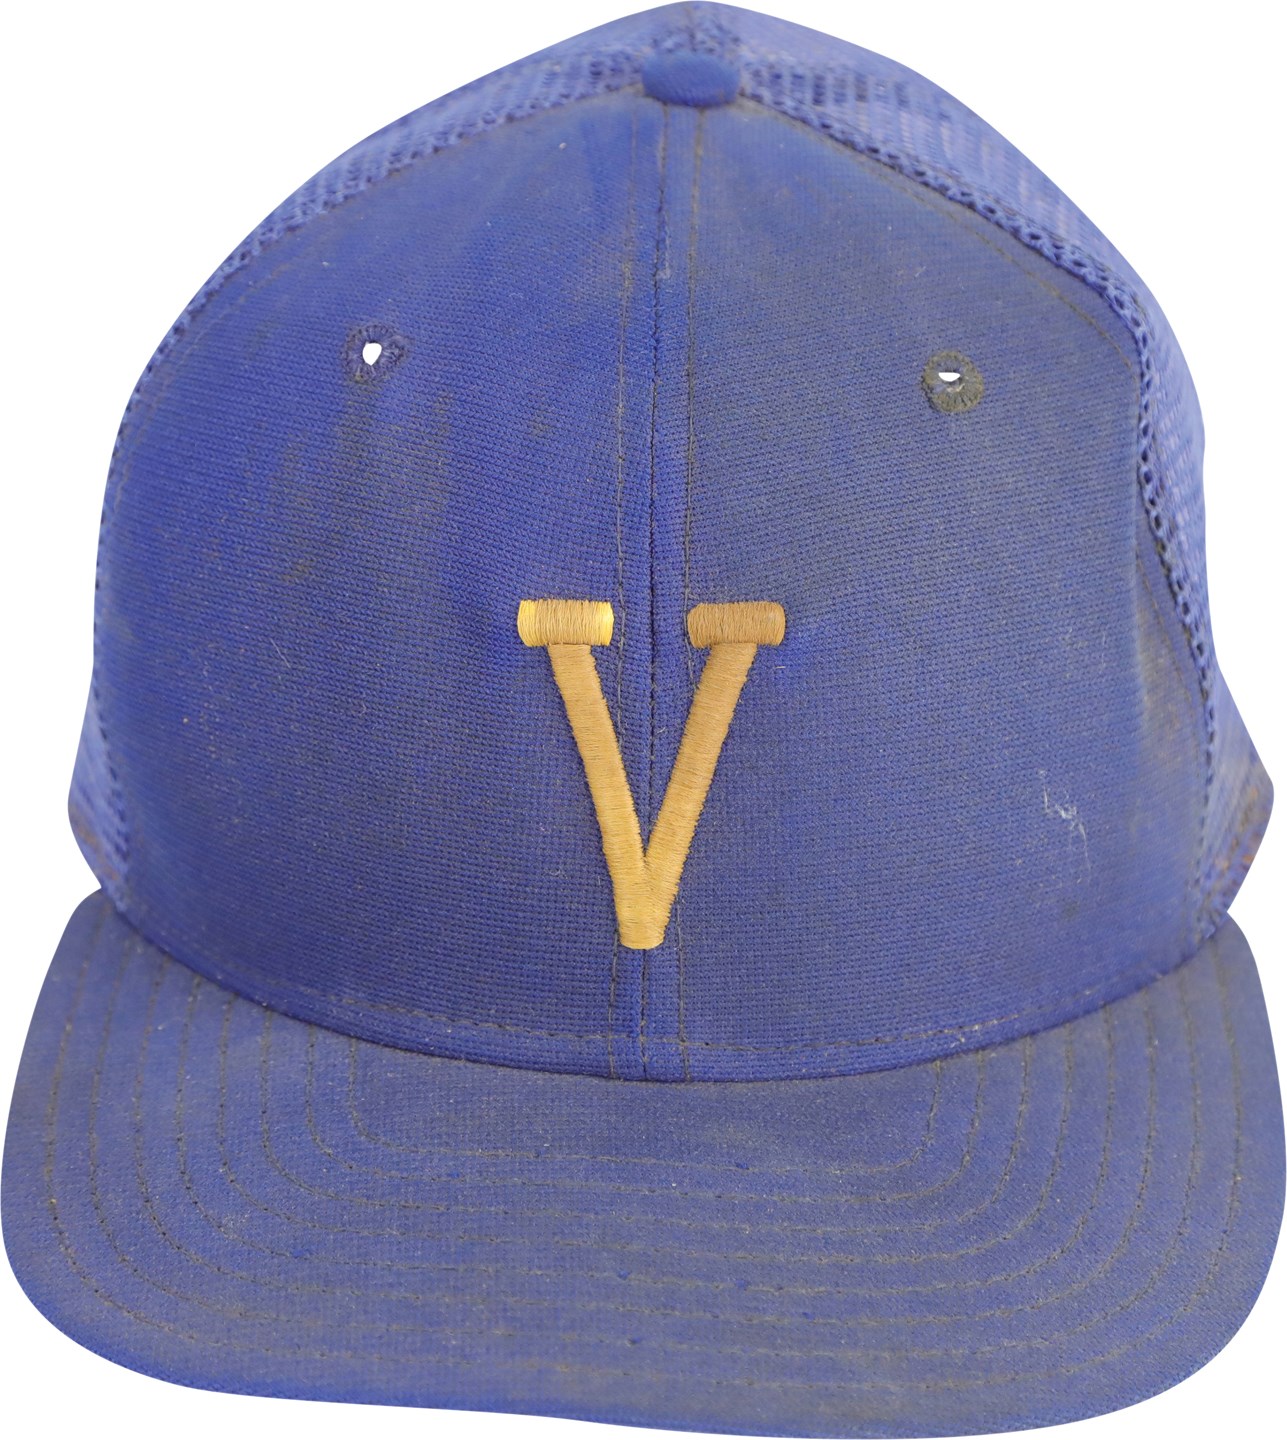 - 1988 Omar Vizquel Vermont Mariners Minor League Game Used Hat